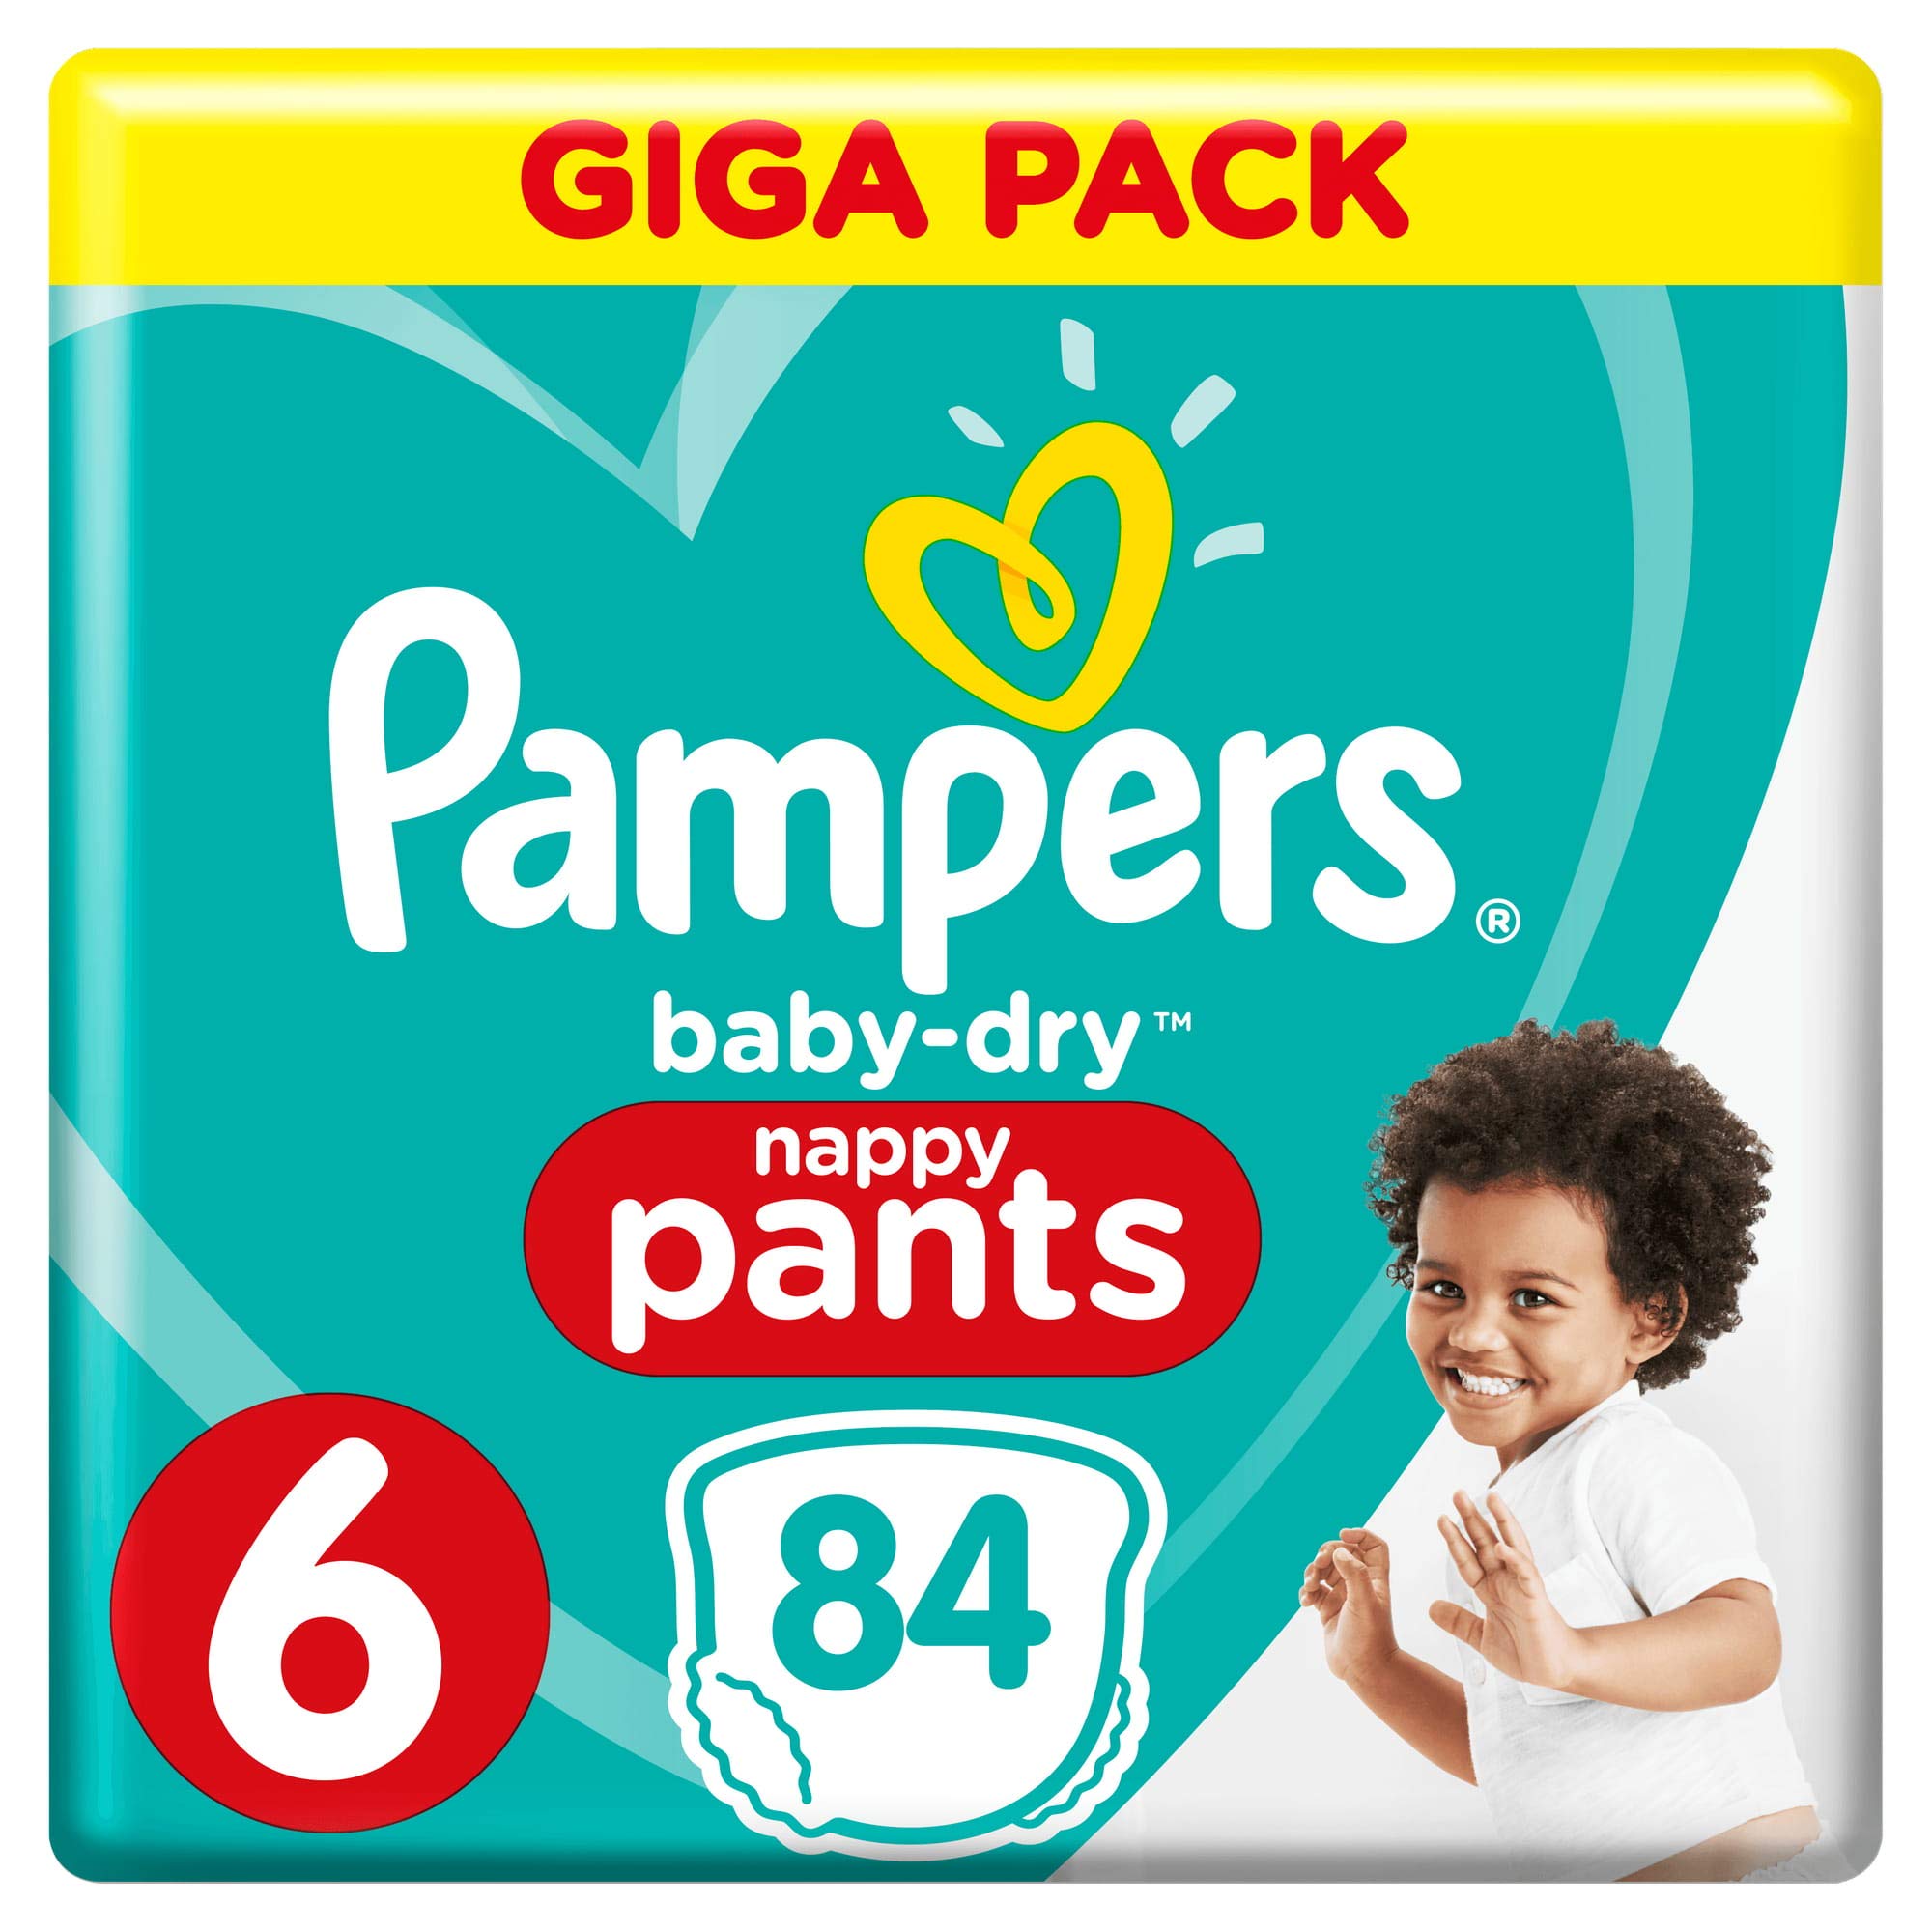 Pampers Baby-Dry Pants Größe 6, 84 Windeln